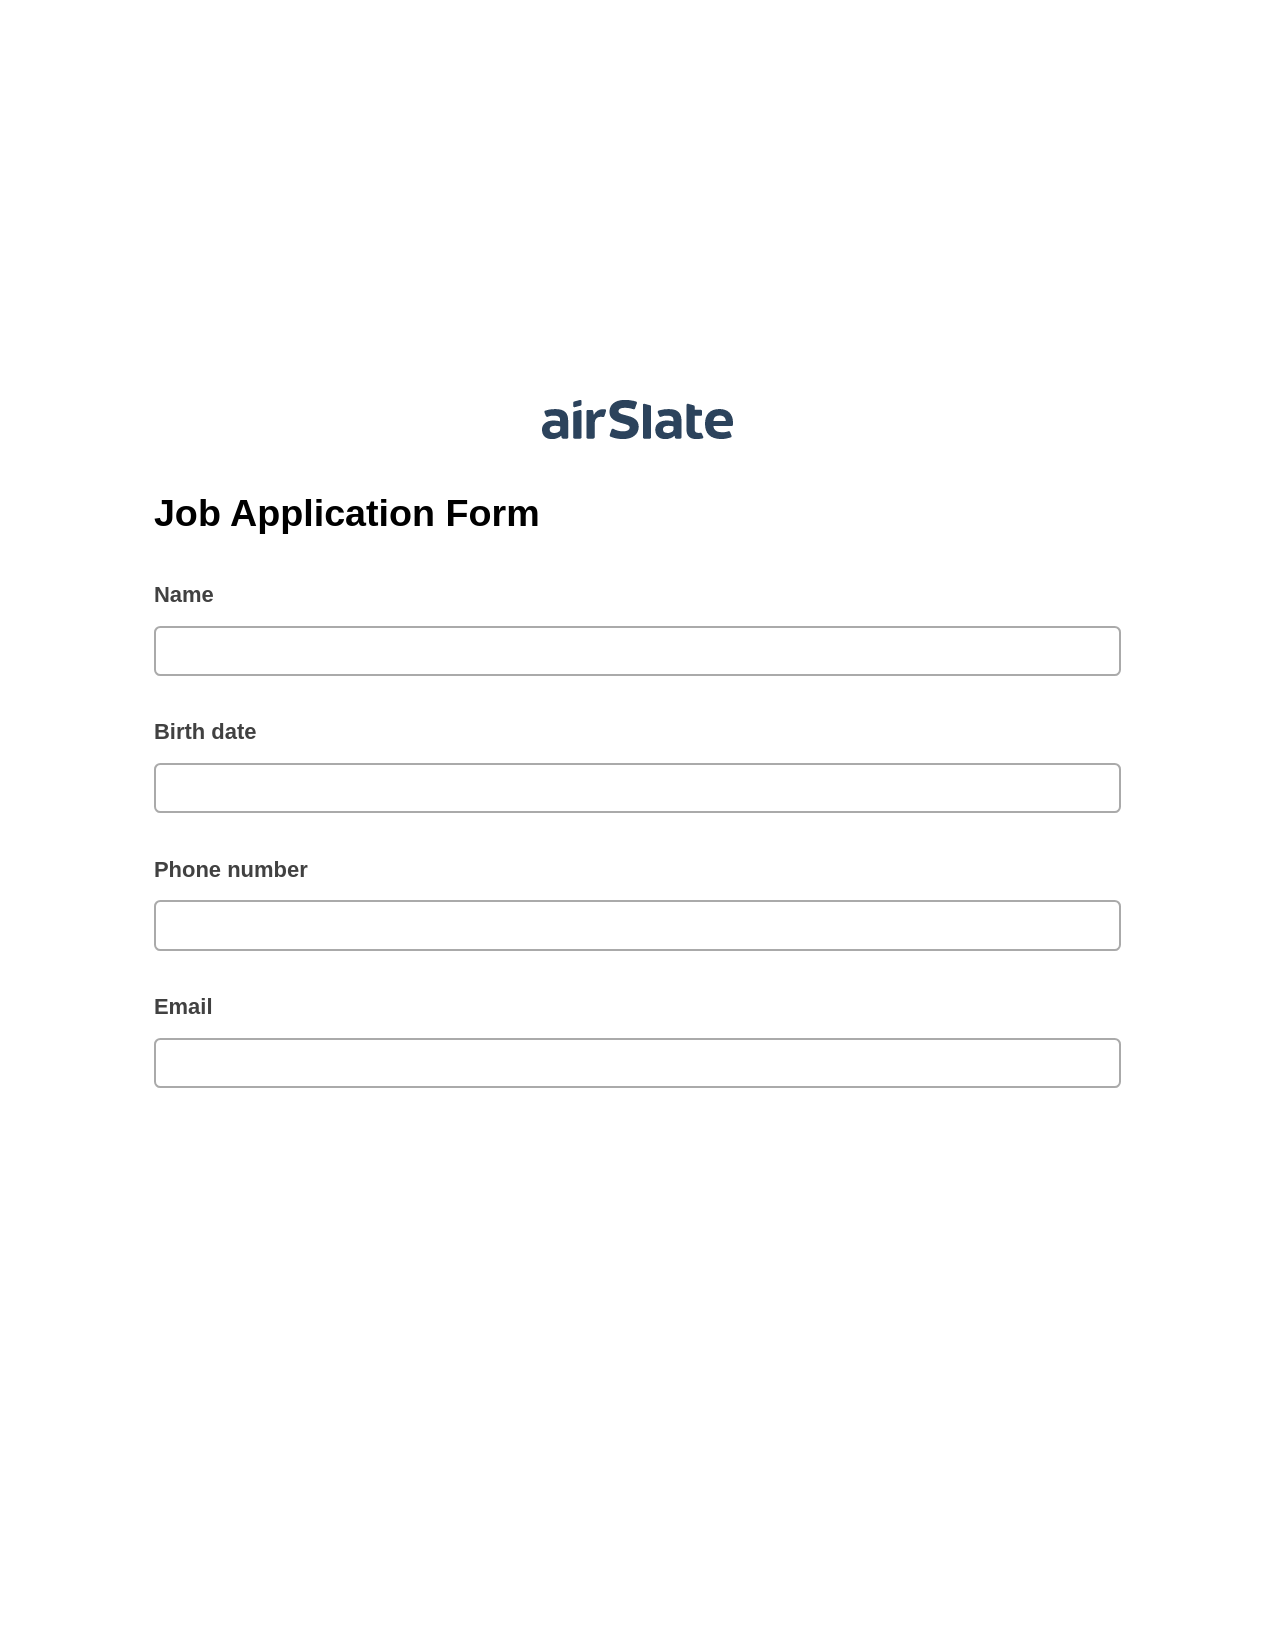 Job Application Form Pre-fill from MySQL Dropdown Options Bot, Create slate addon, OneDrive Bot